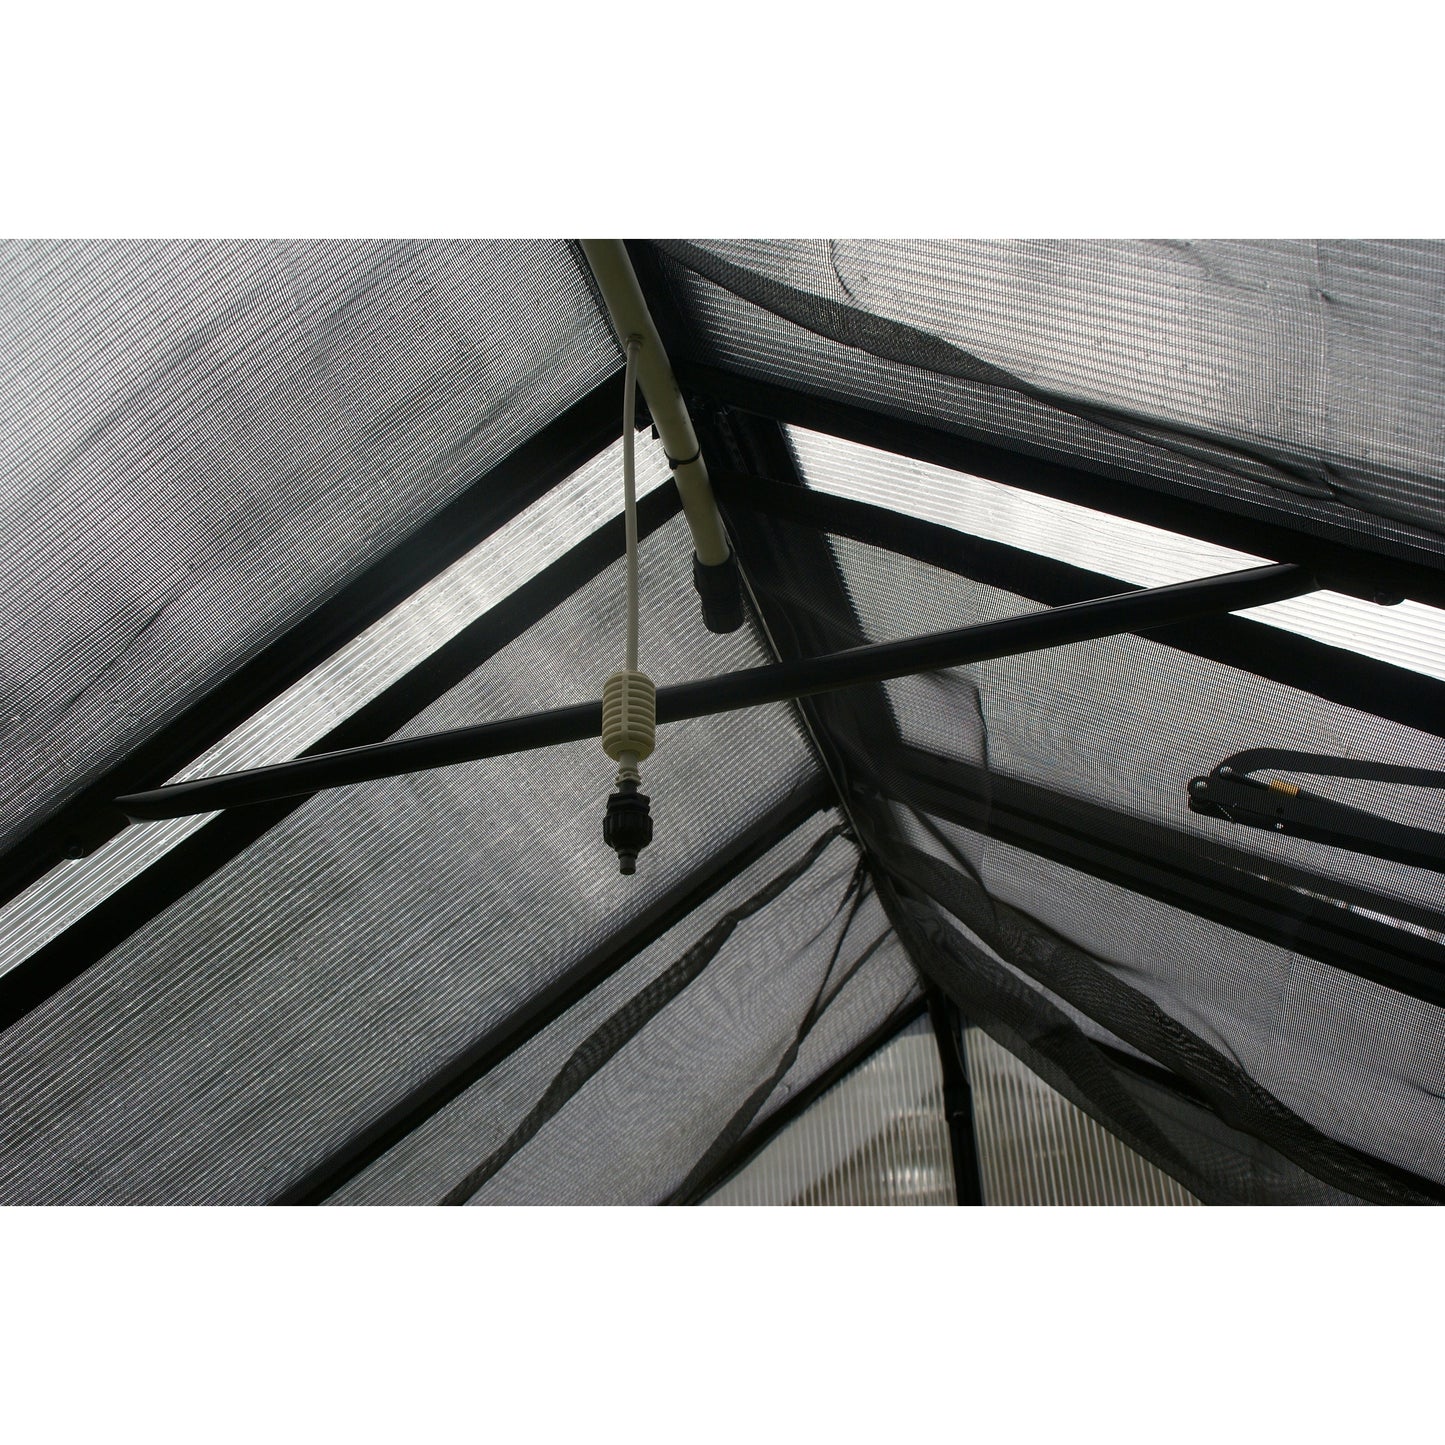 Mont Greenhouse 8FTx 16FT - Black Finish - Premium Package MONT-16-BK-PREMIUM